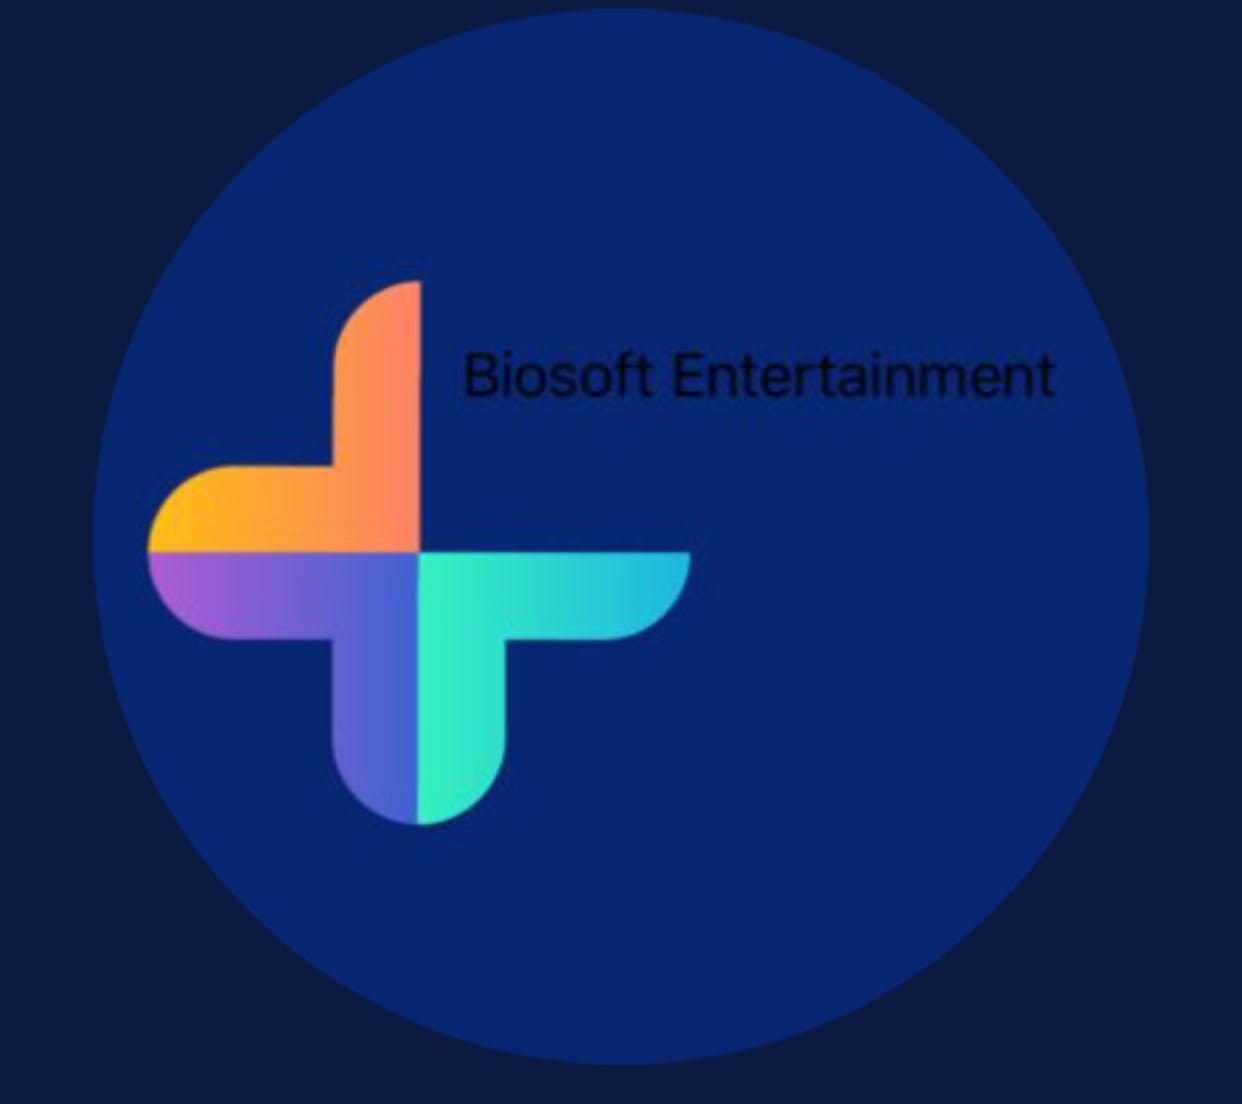 Biosoft Entertainment